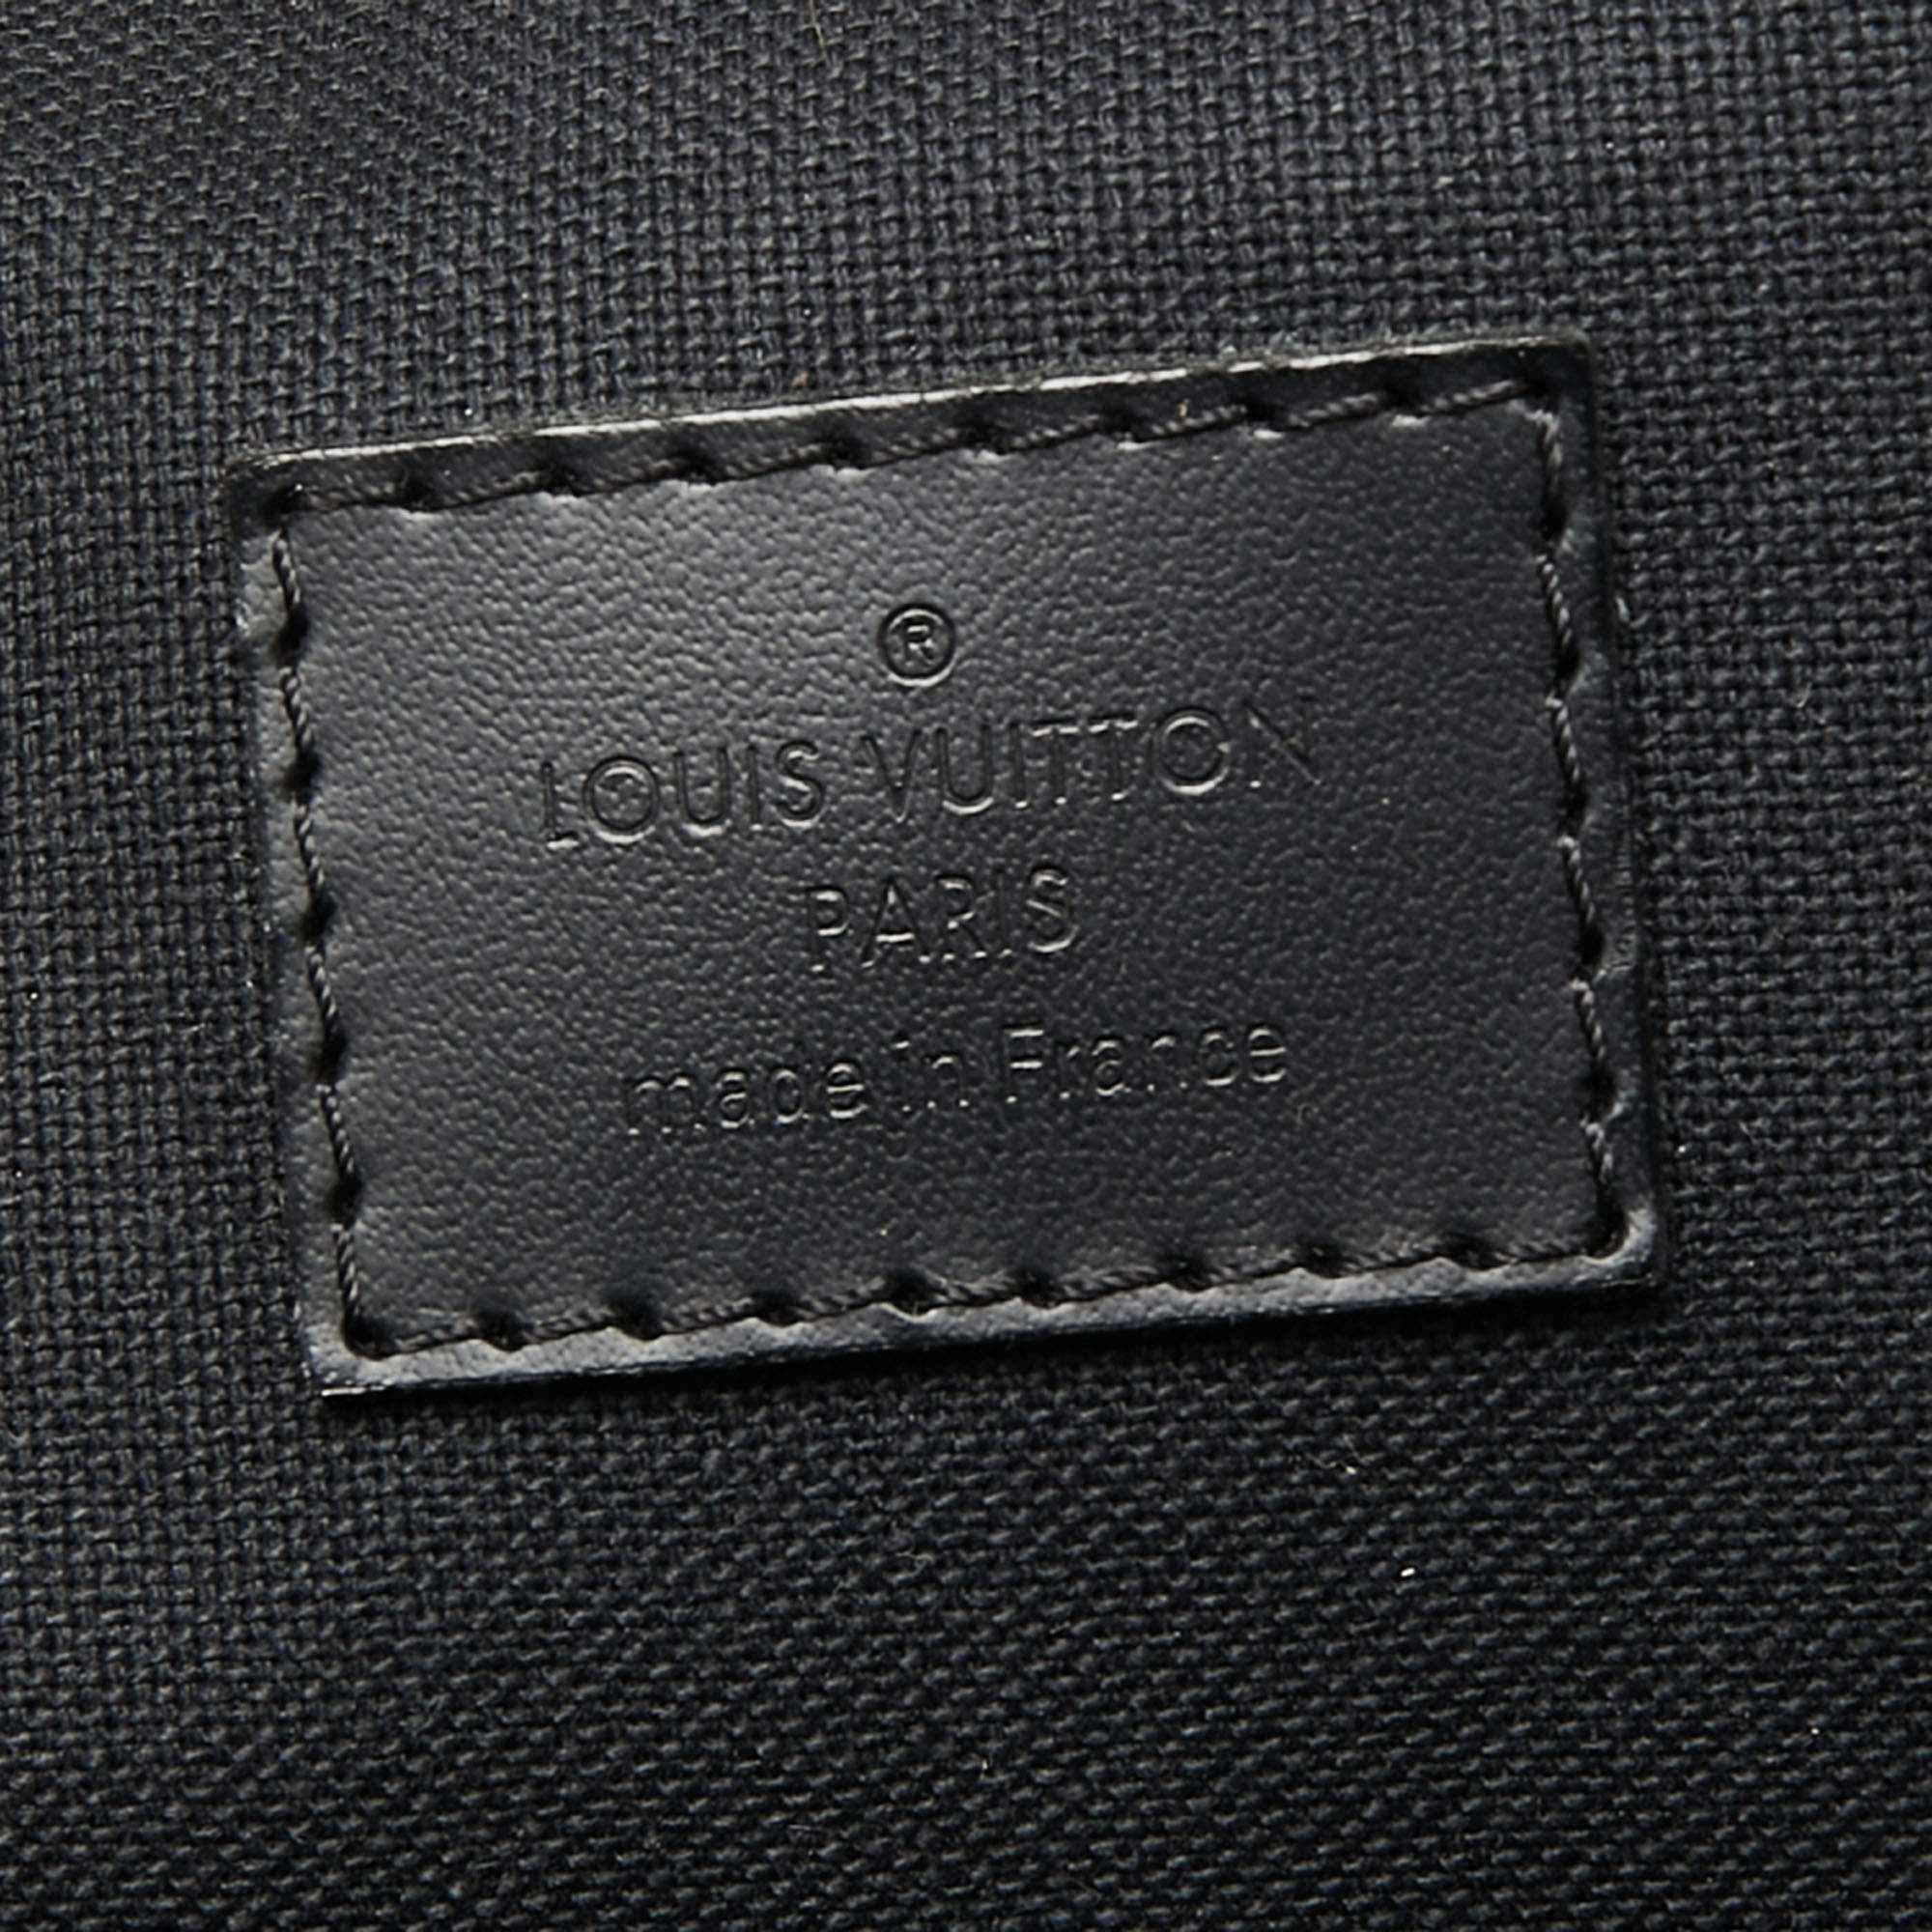 Louis Vuitton Damier Graphite 13 In Laptop Sleeve 189765